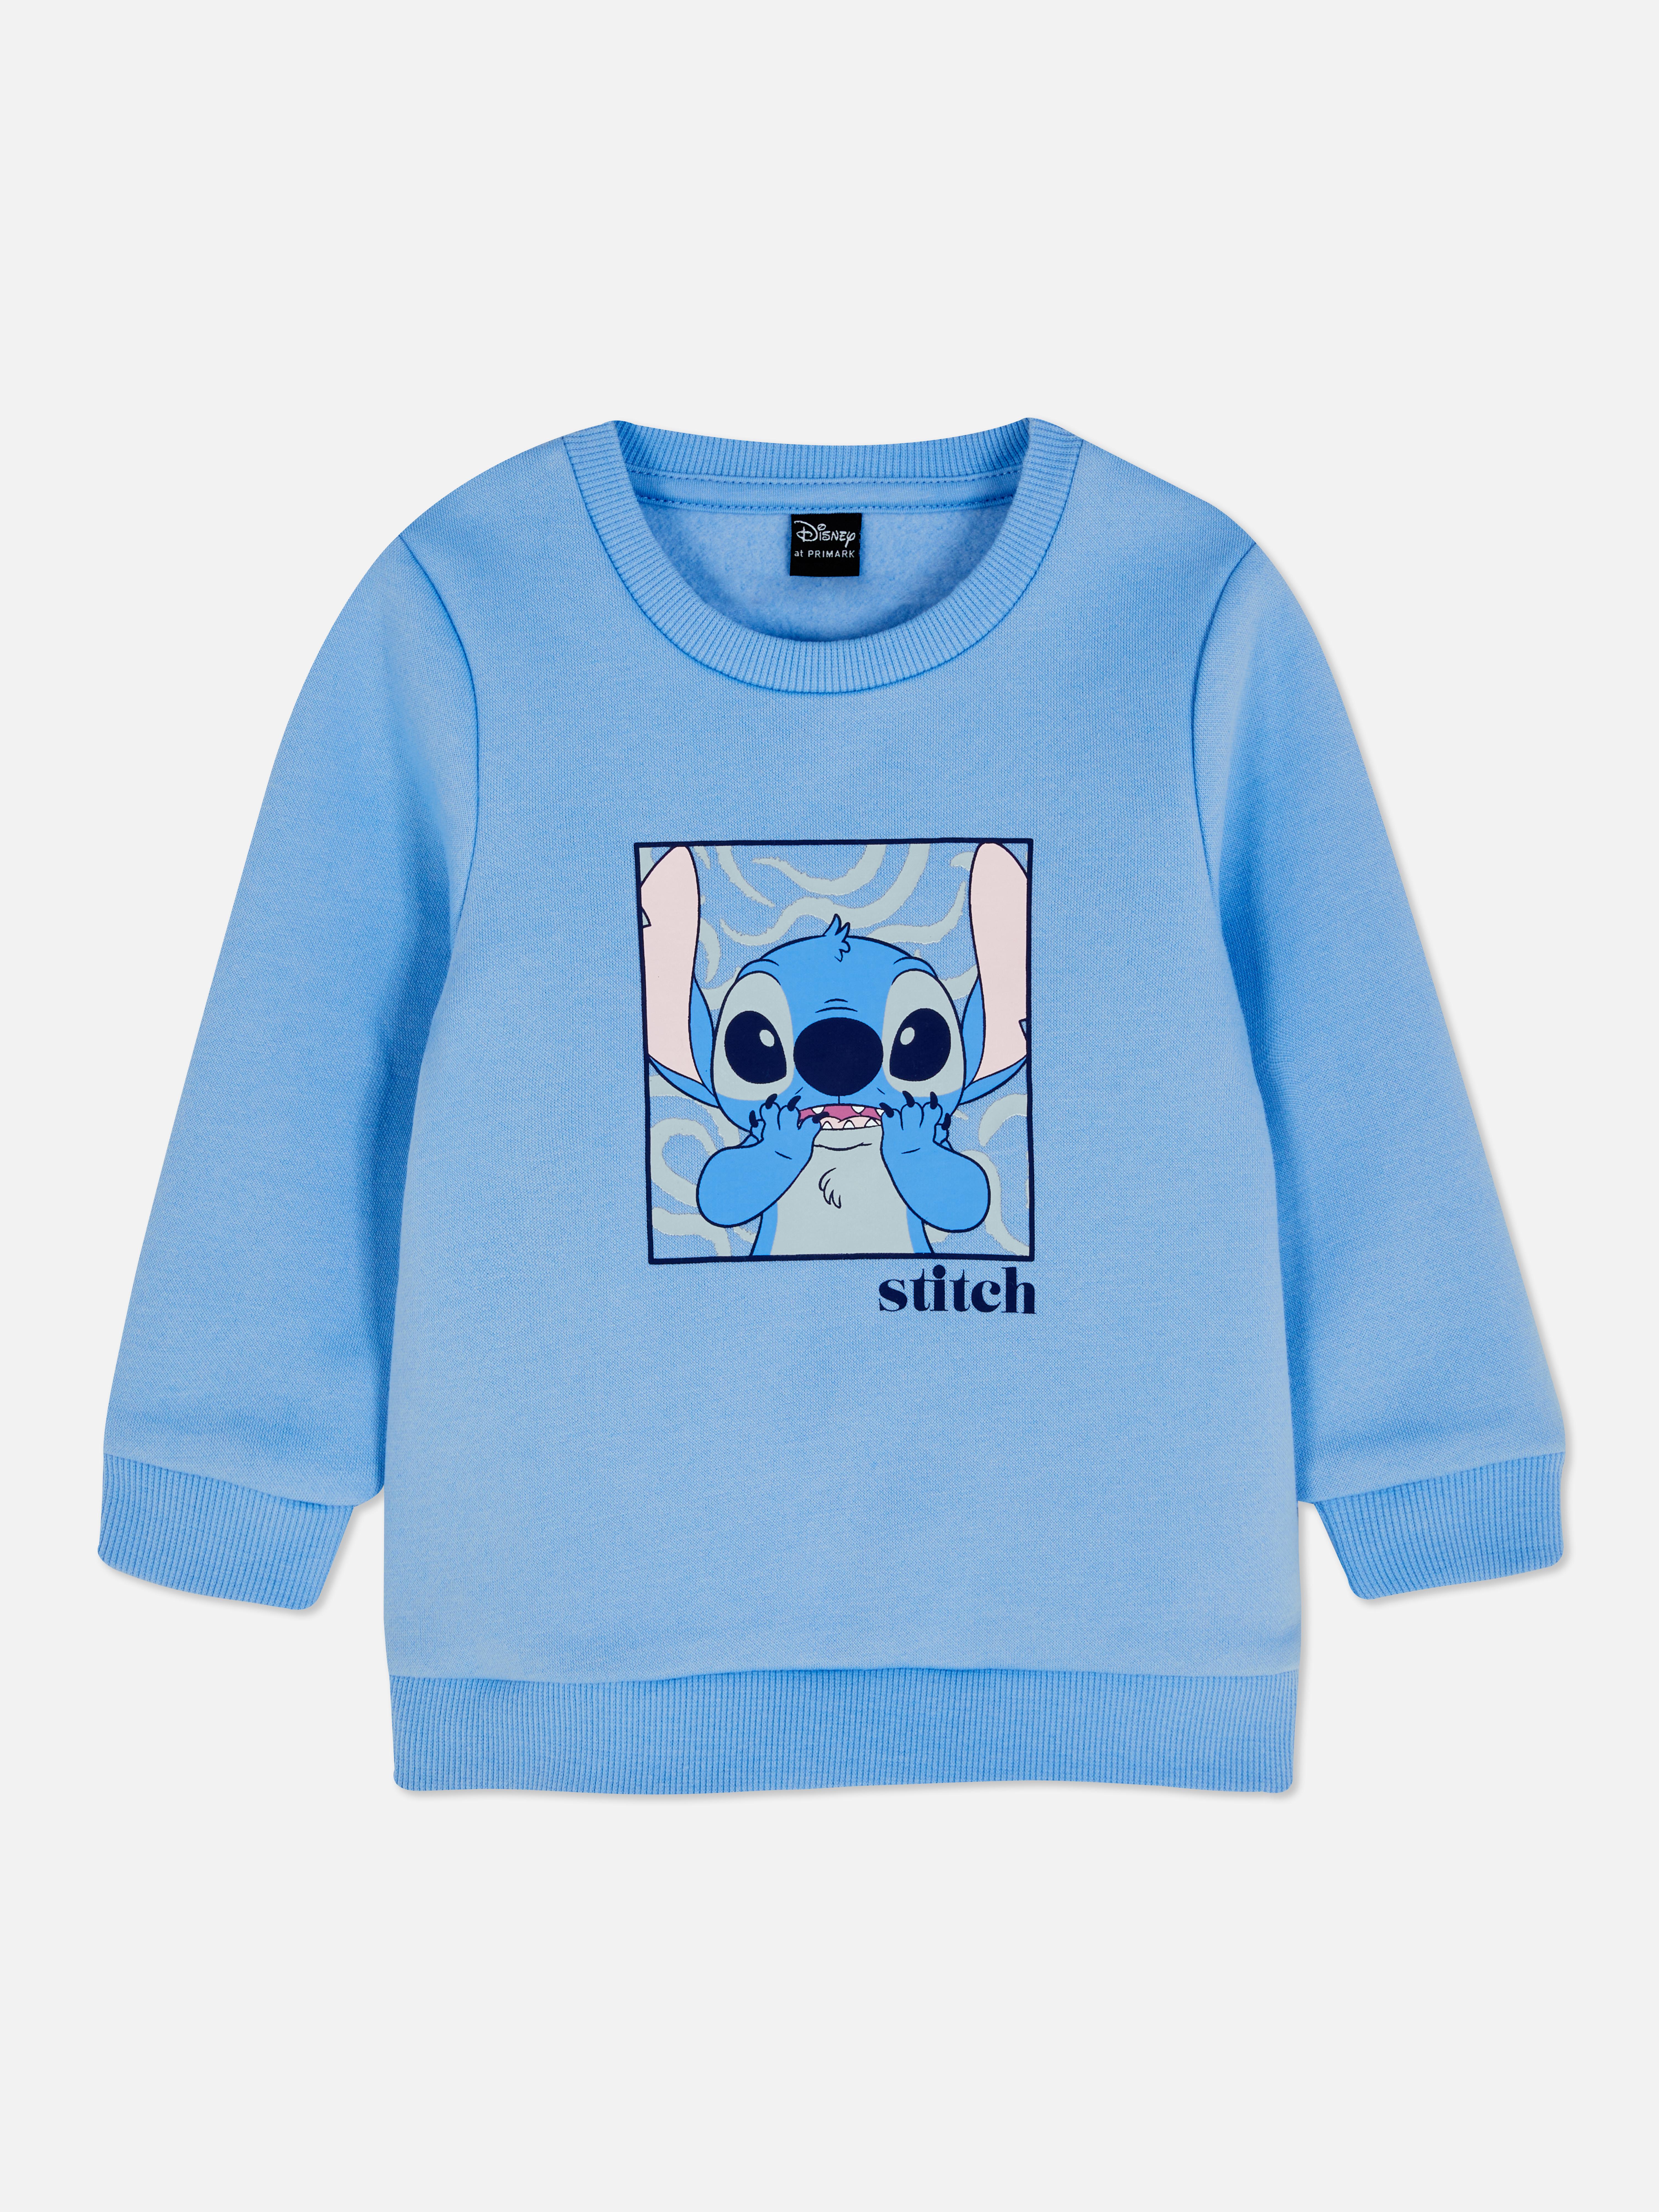 Disney’s Lilo & Stitch Printed Sweatshirt